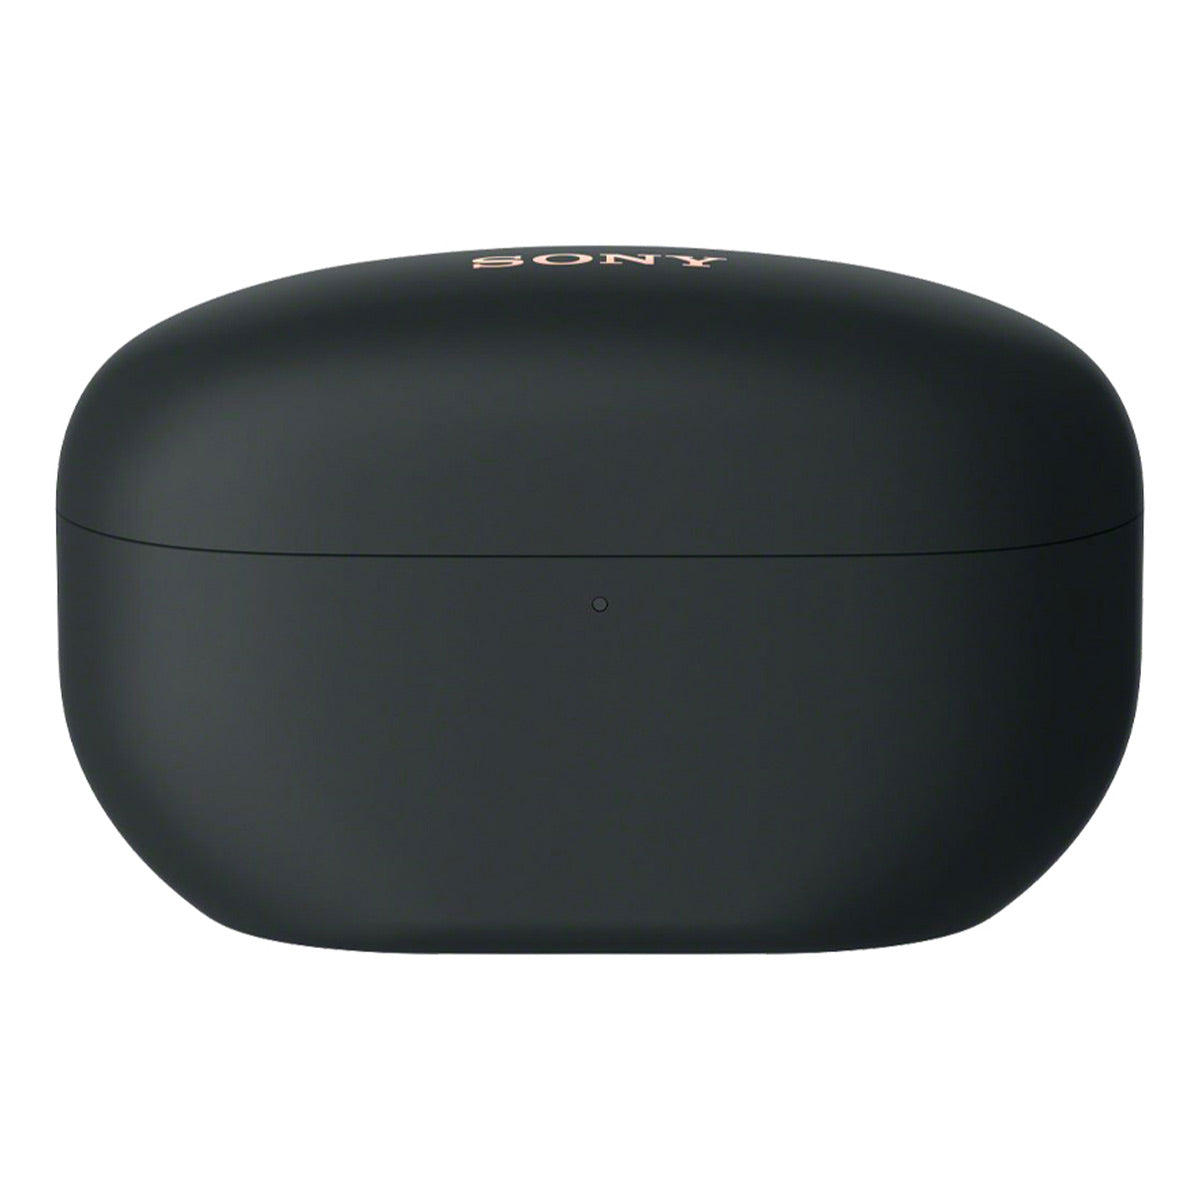 Sony WF-1000XM5 Truly Wireless Noise Canceling Earbuds (Black)